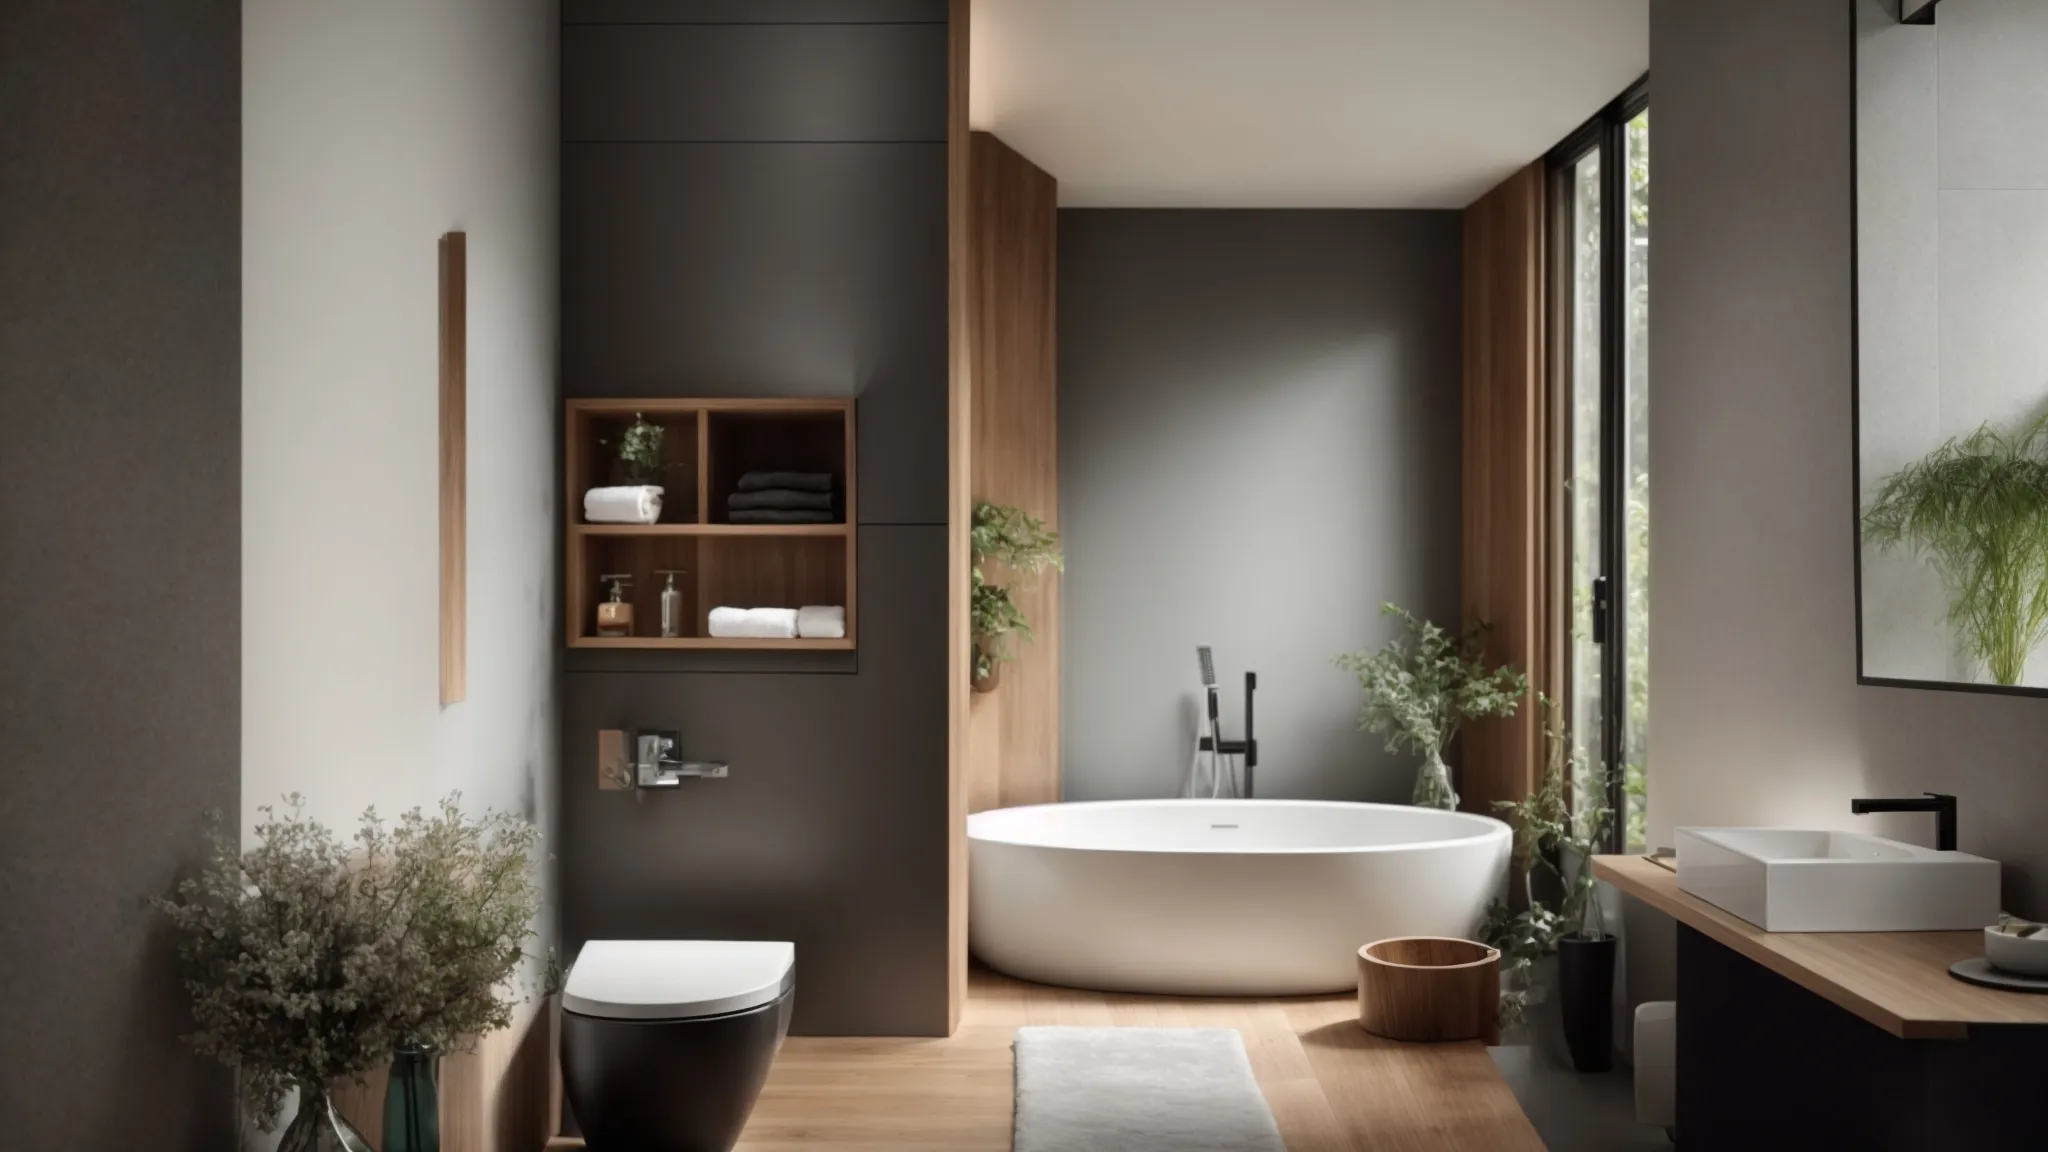 a sleek, modern bathroom showcasing a prominently featured water-efficient toilet amidst environmentally friendly decor.